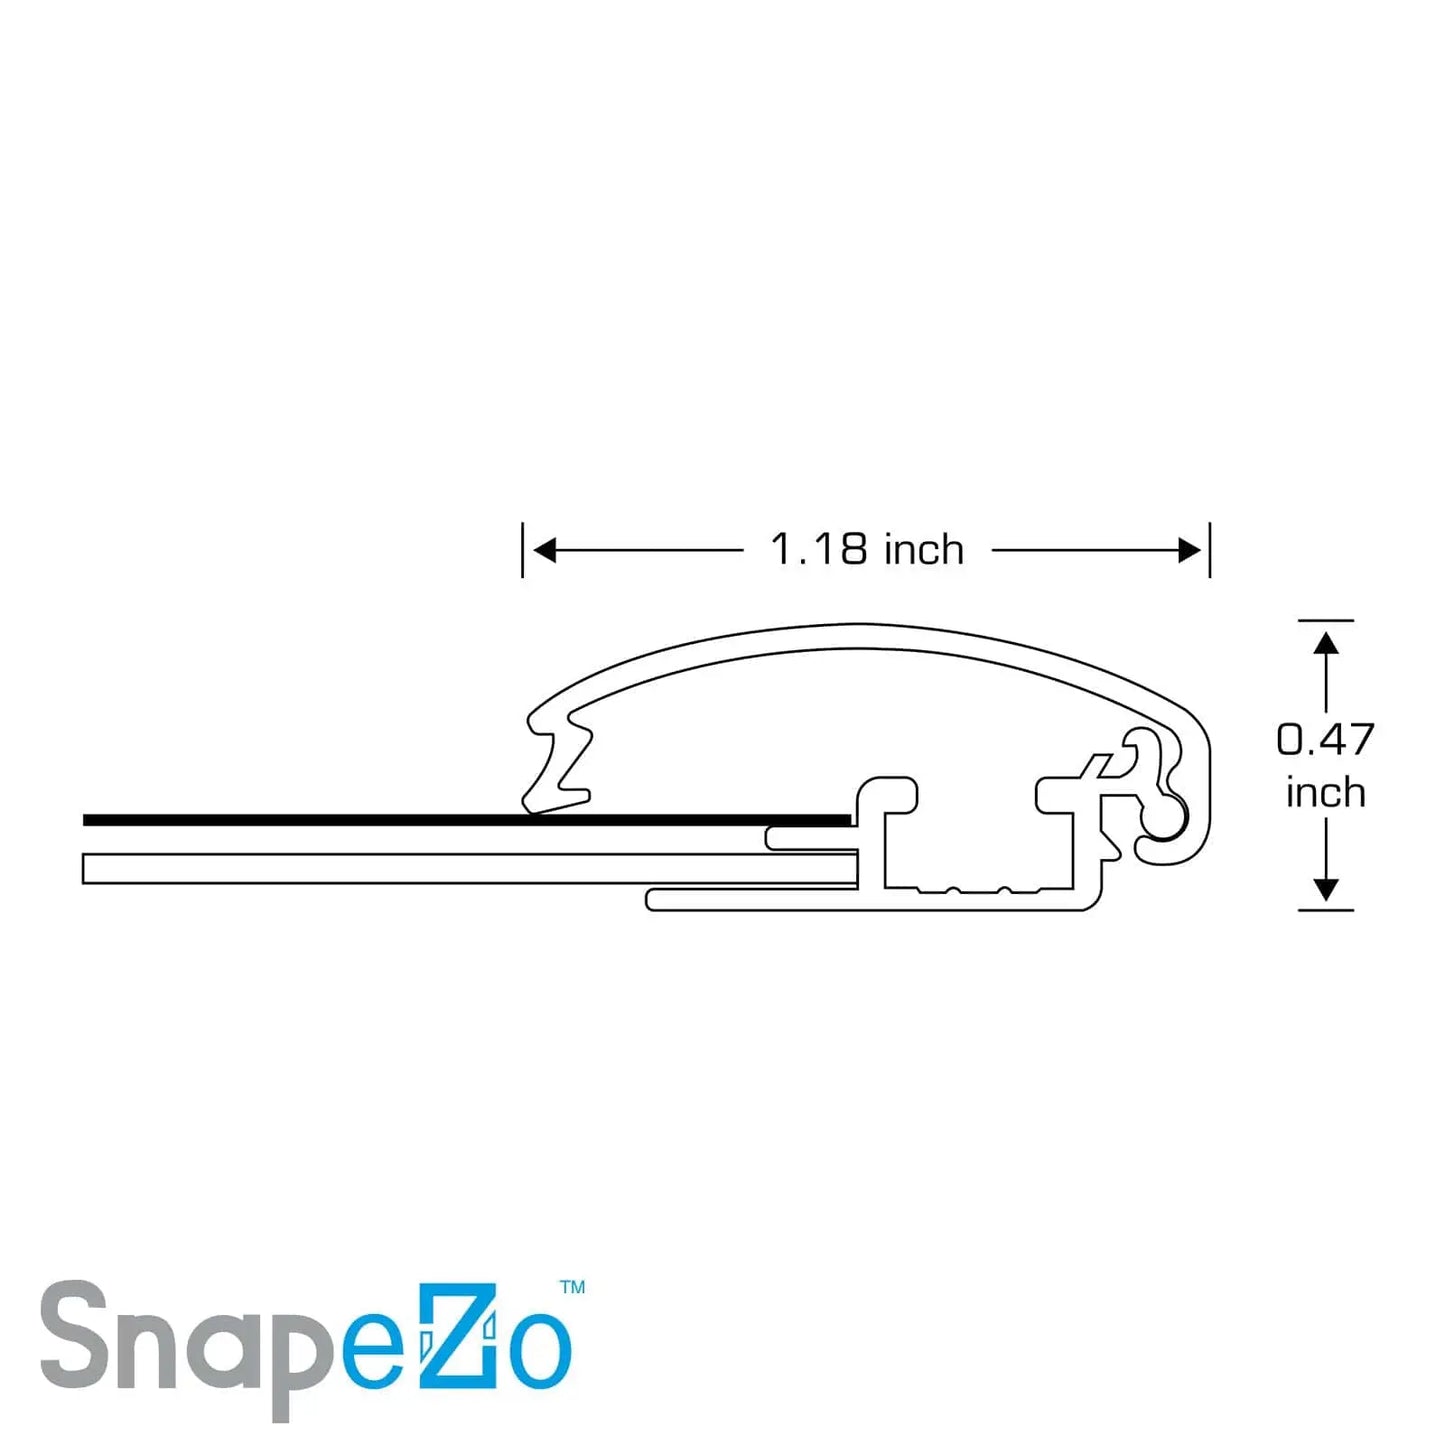 18x24 Silver SnapeZo® Snap Frame - 1.2" Profile - Snap Frames Direct